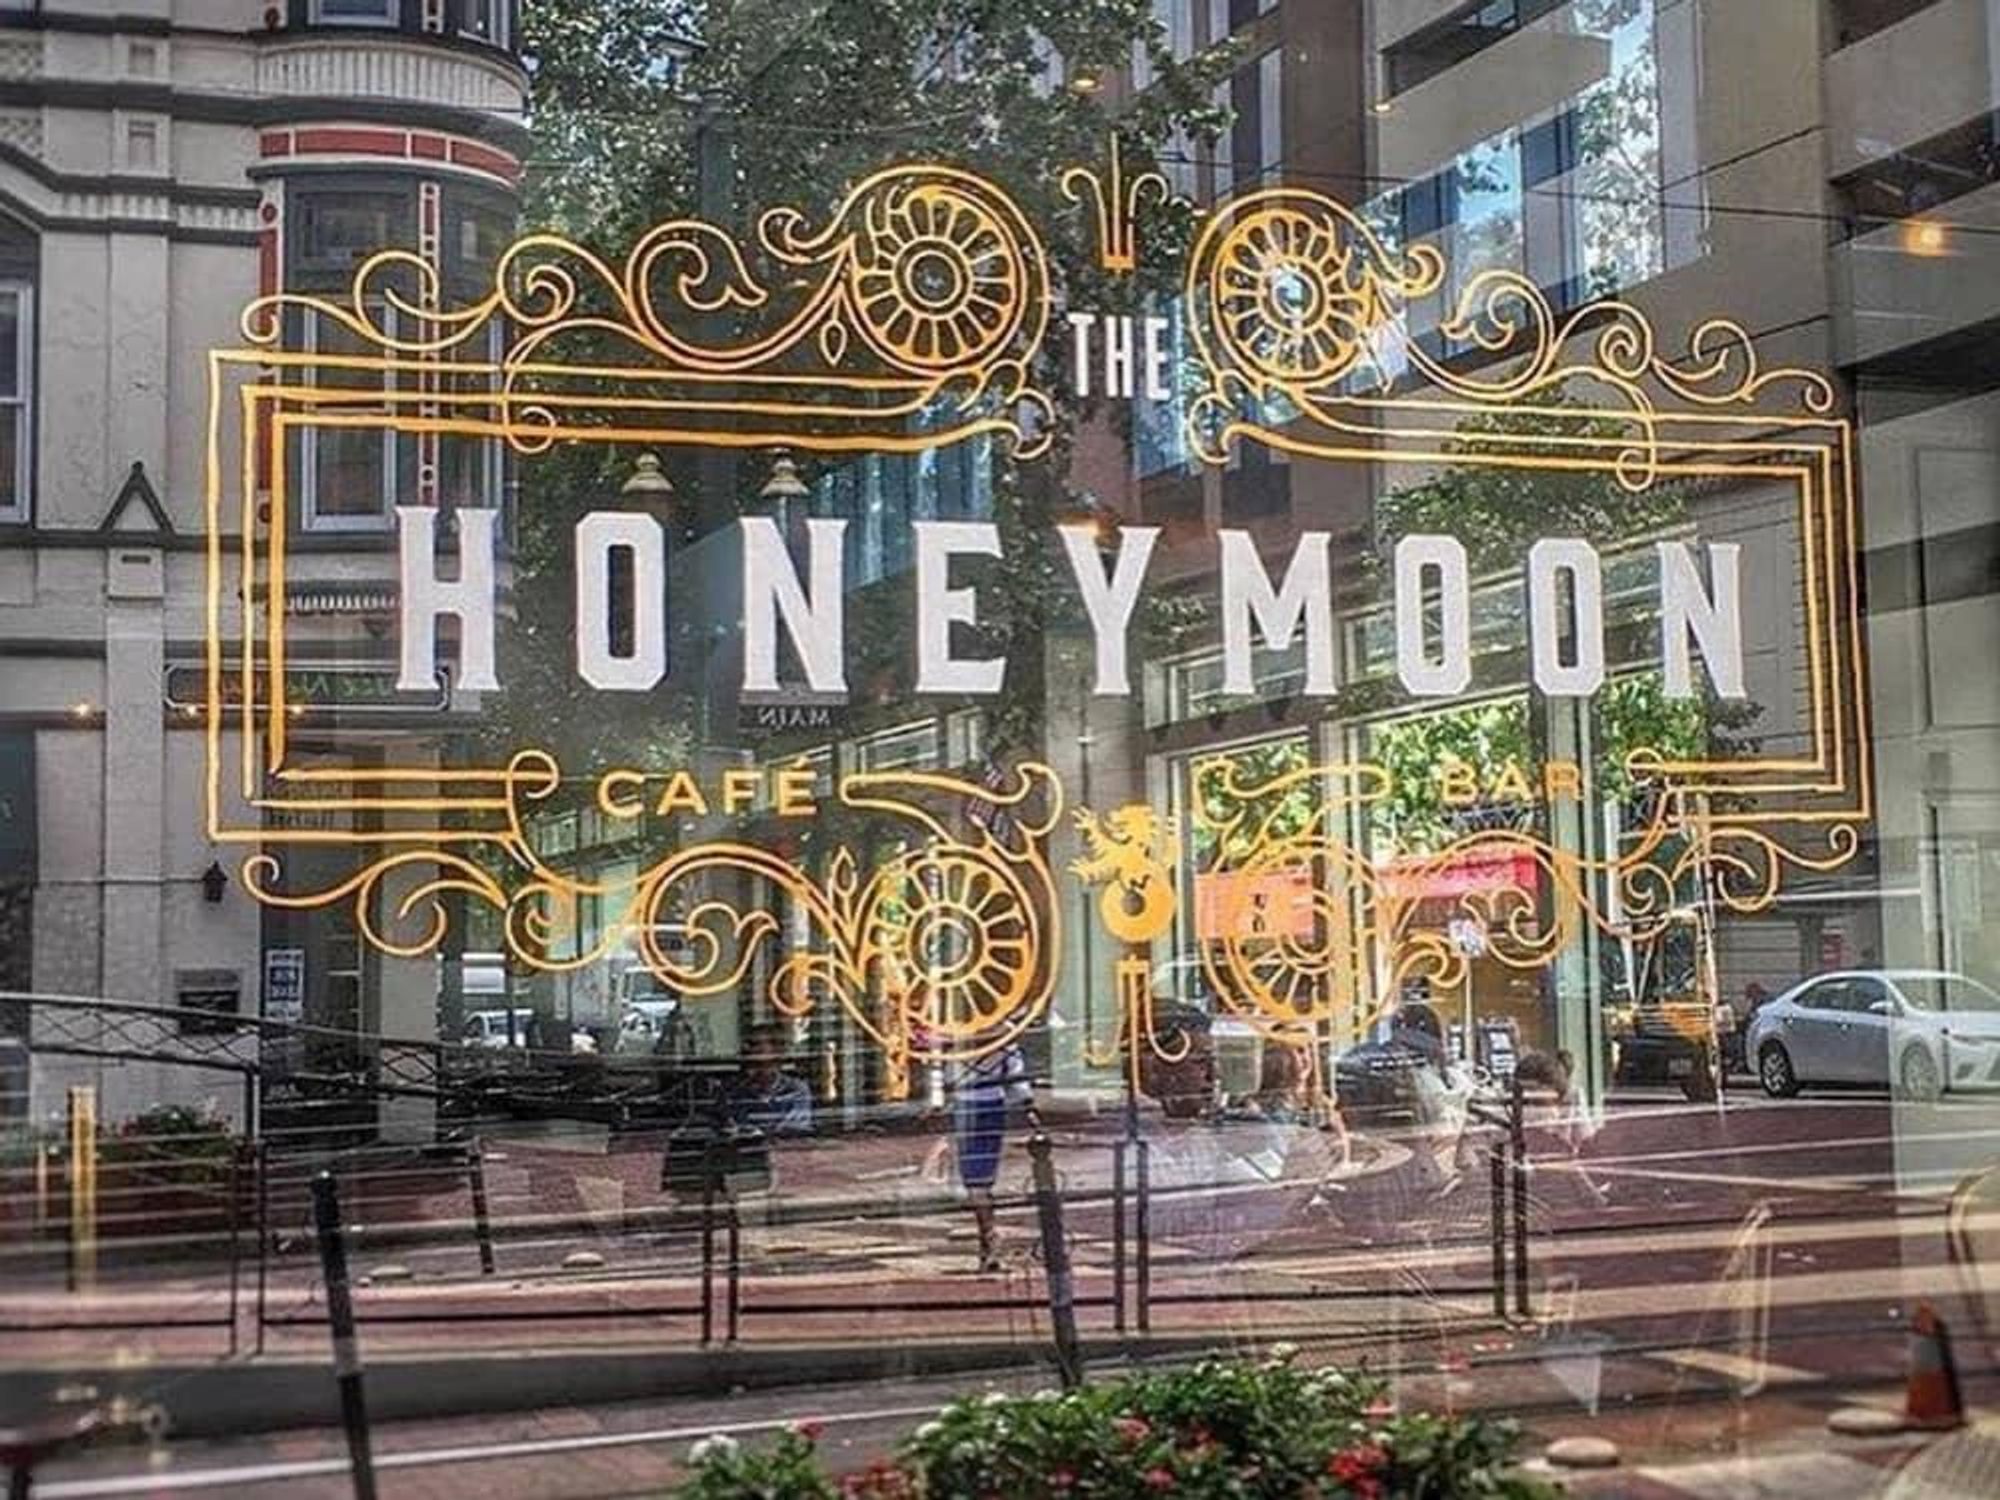 The Honeymoon Cafe exterior window